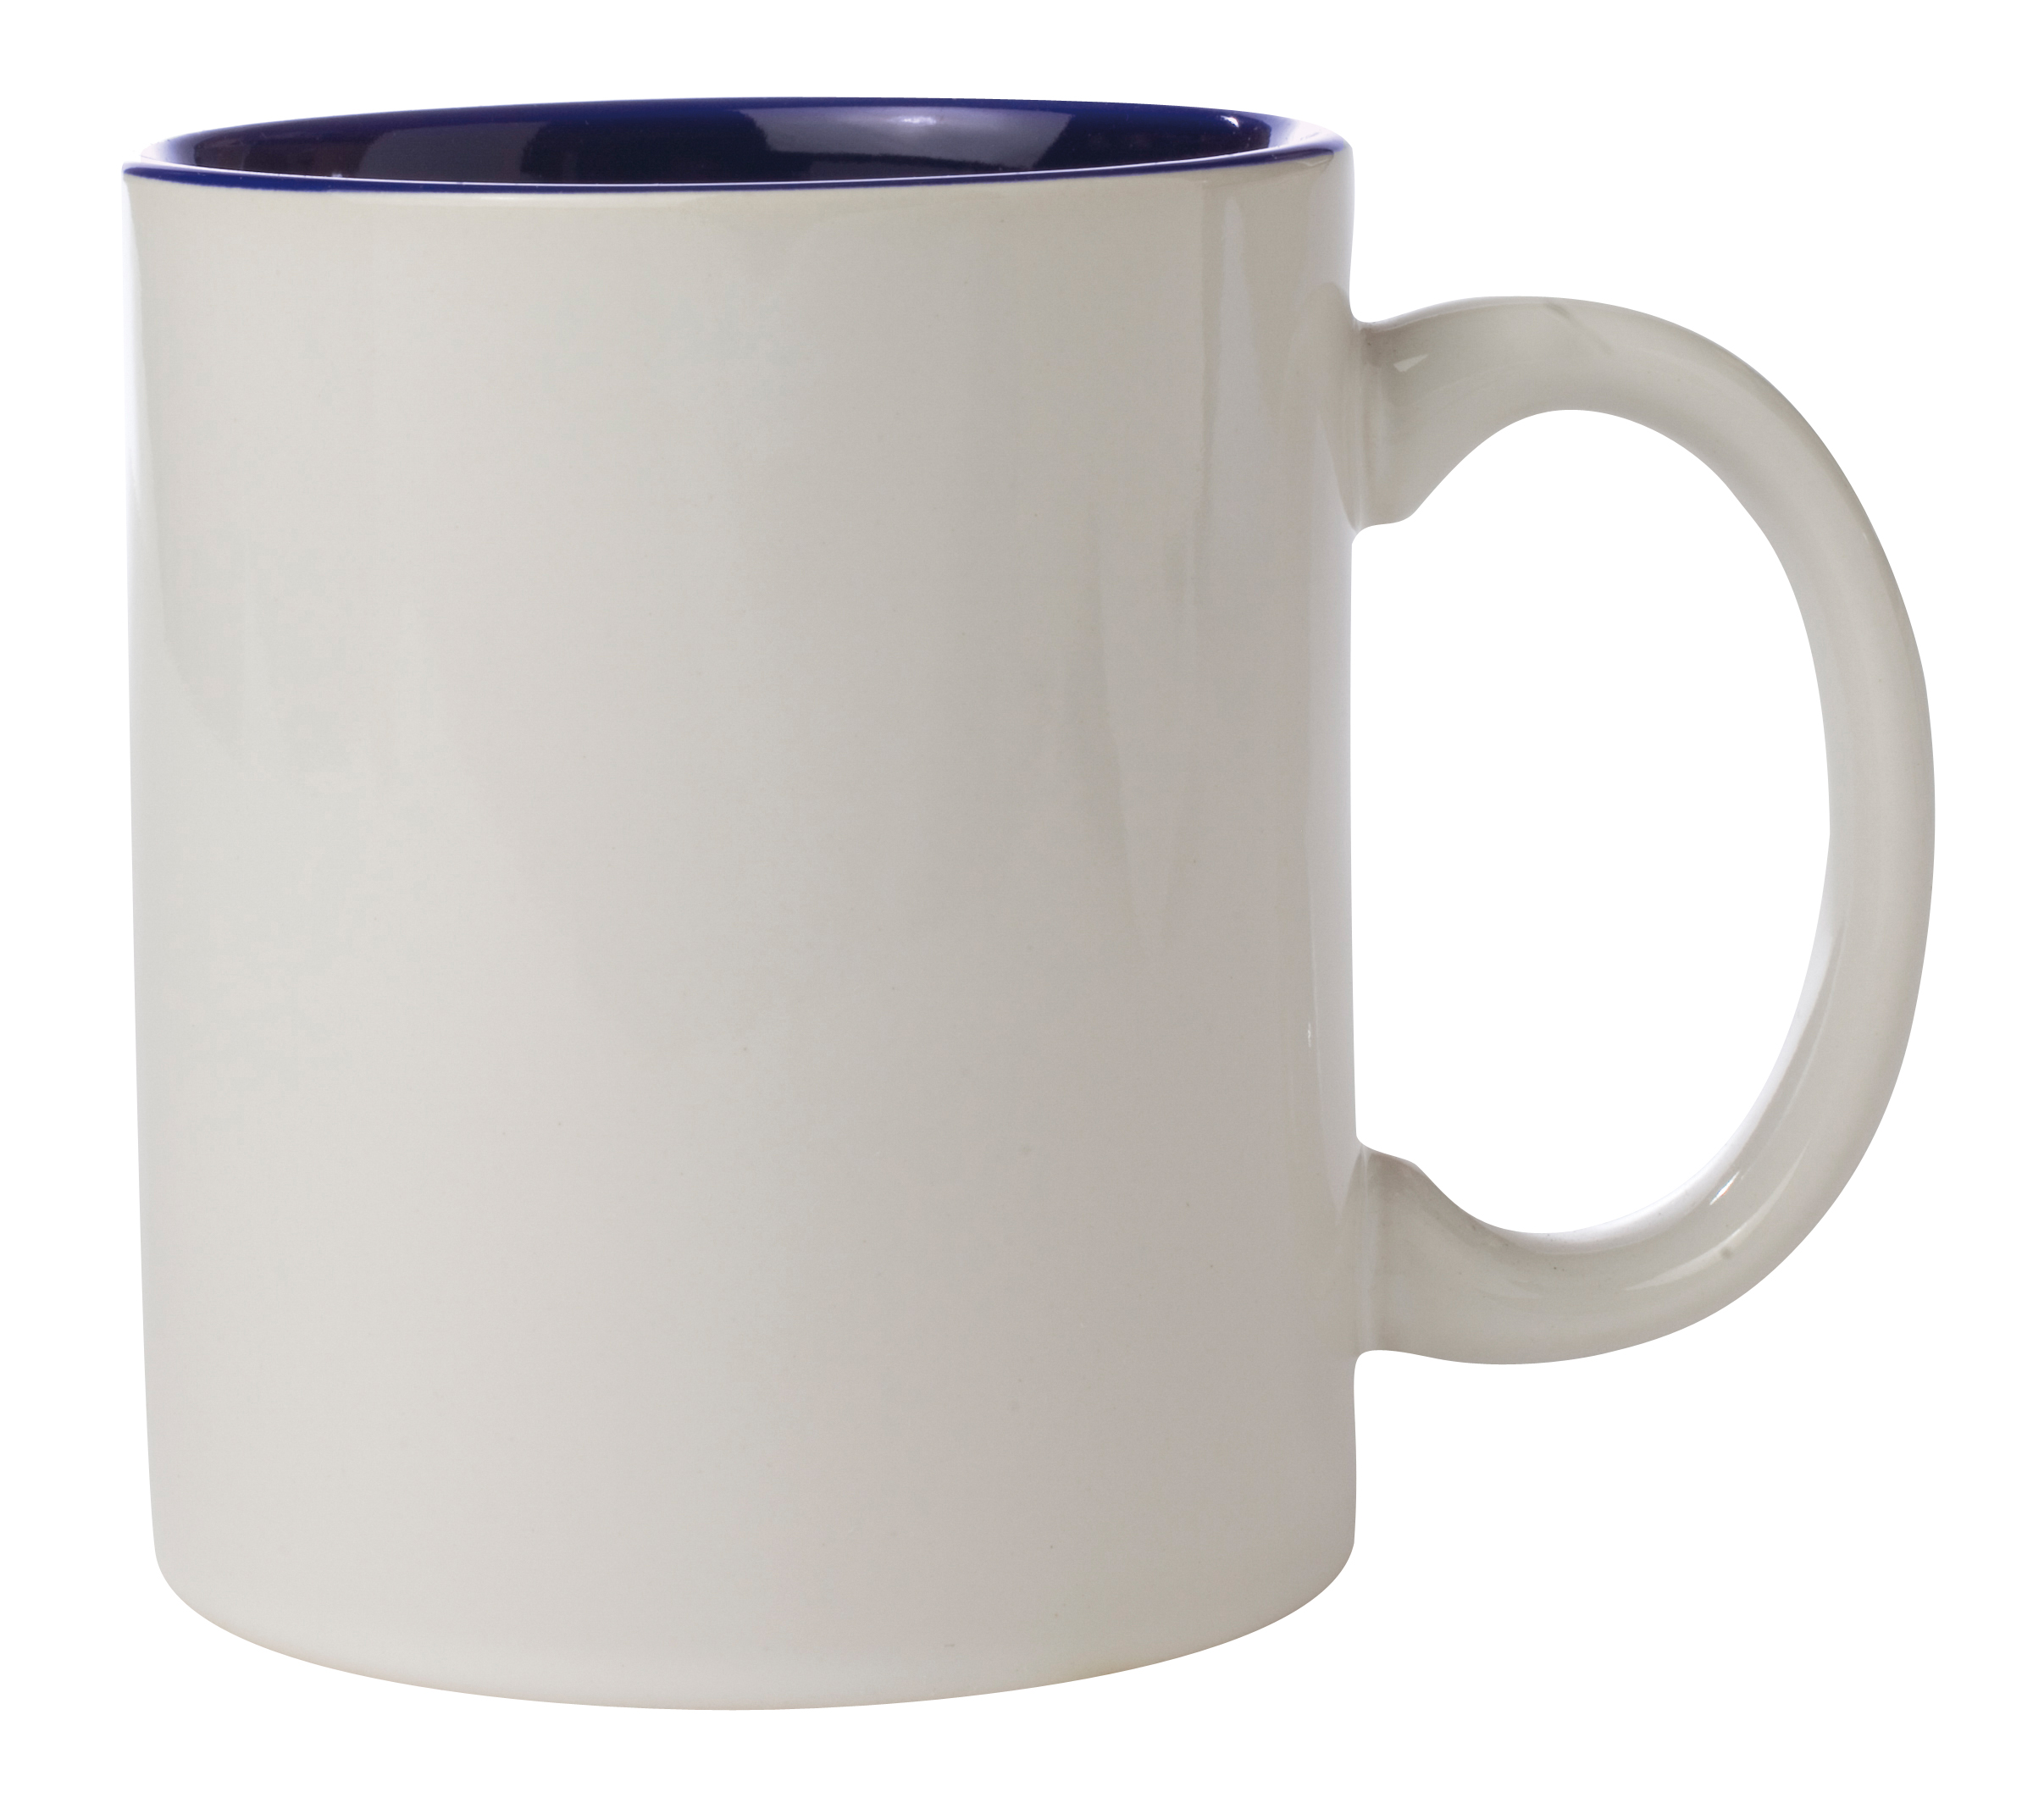 dripping coffee mug - /food/b